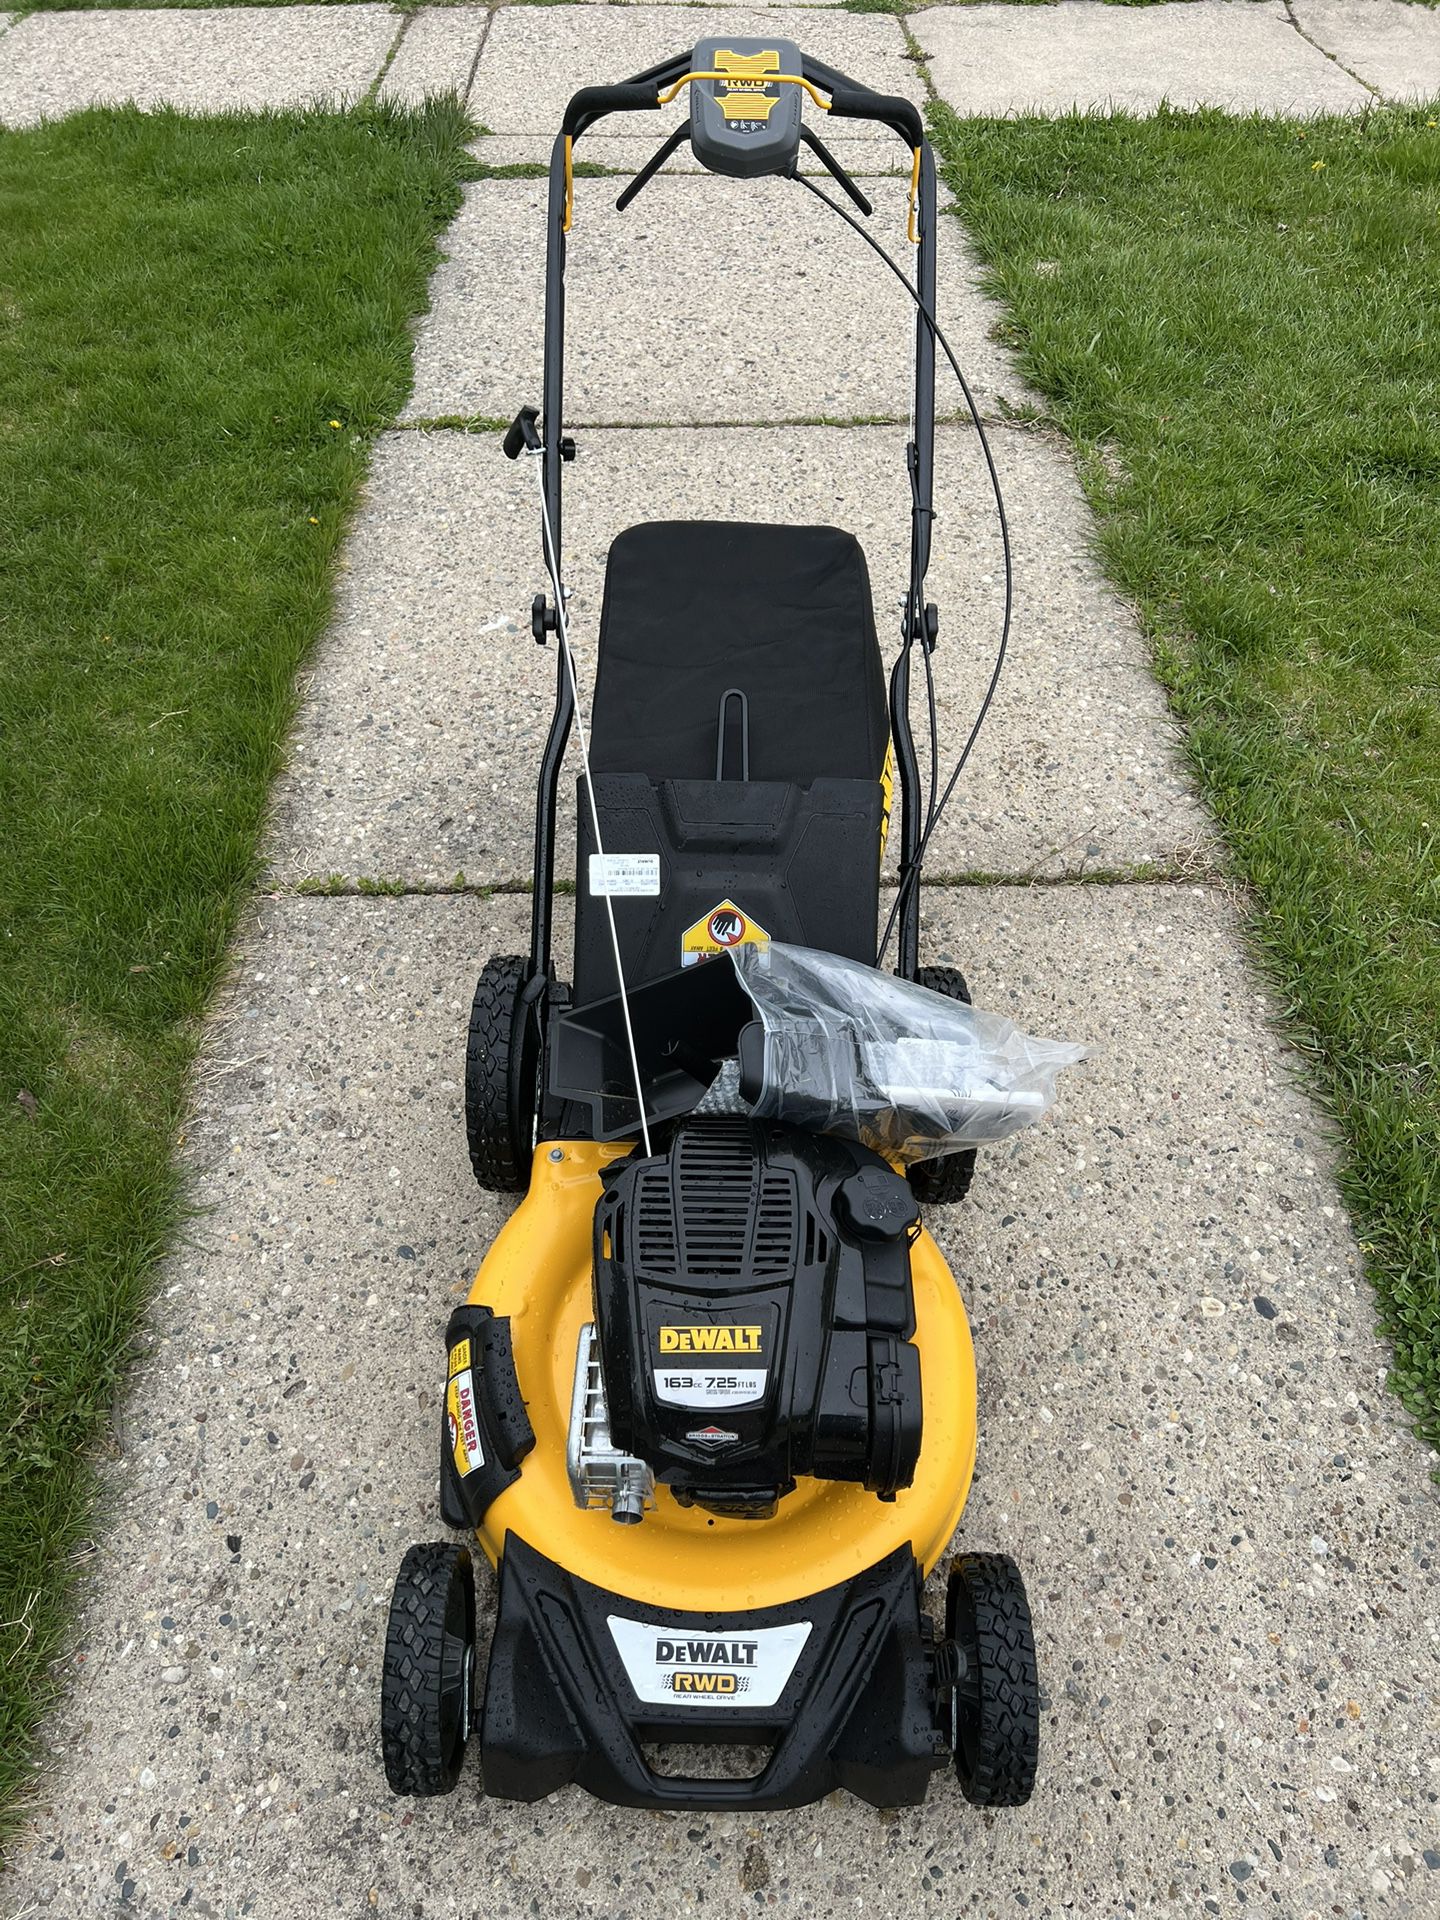 New DeWalt 21” Rear Wheel Drive Variable Speed Self Propelled 3 in 1 Gas Lawnmower Lawn Mower